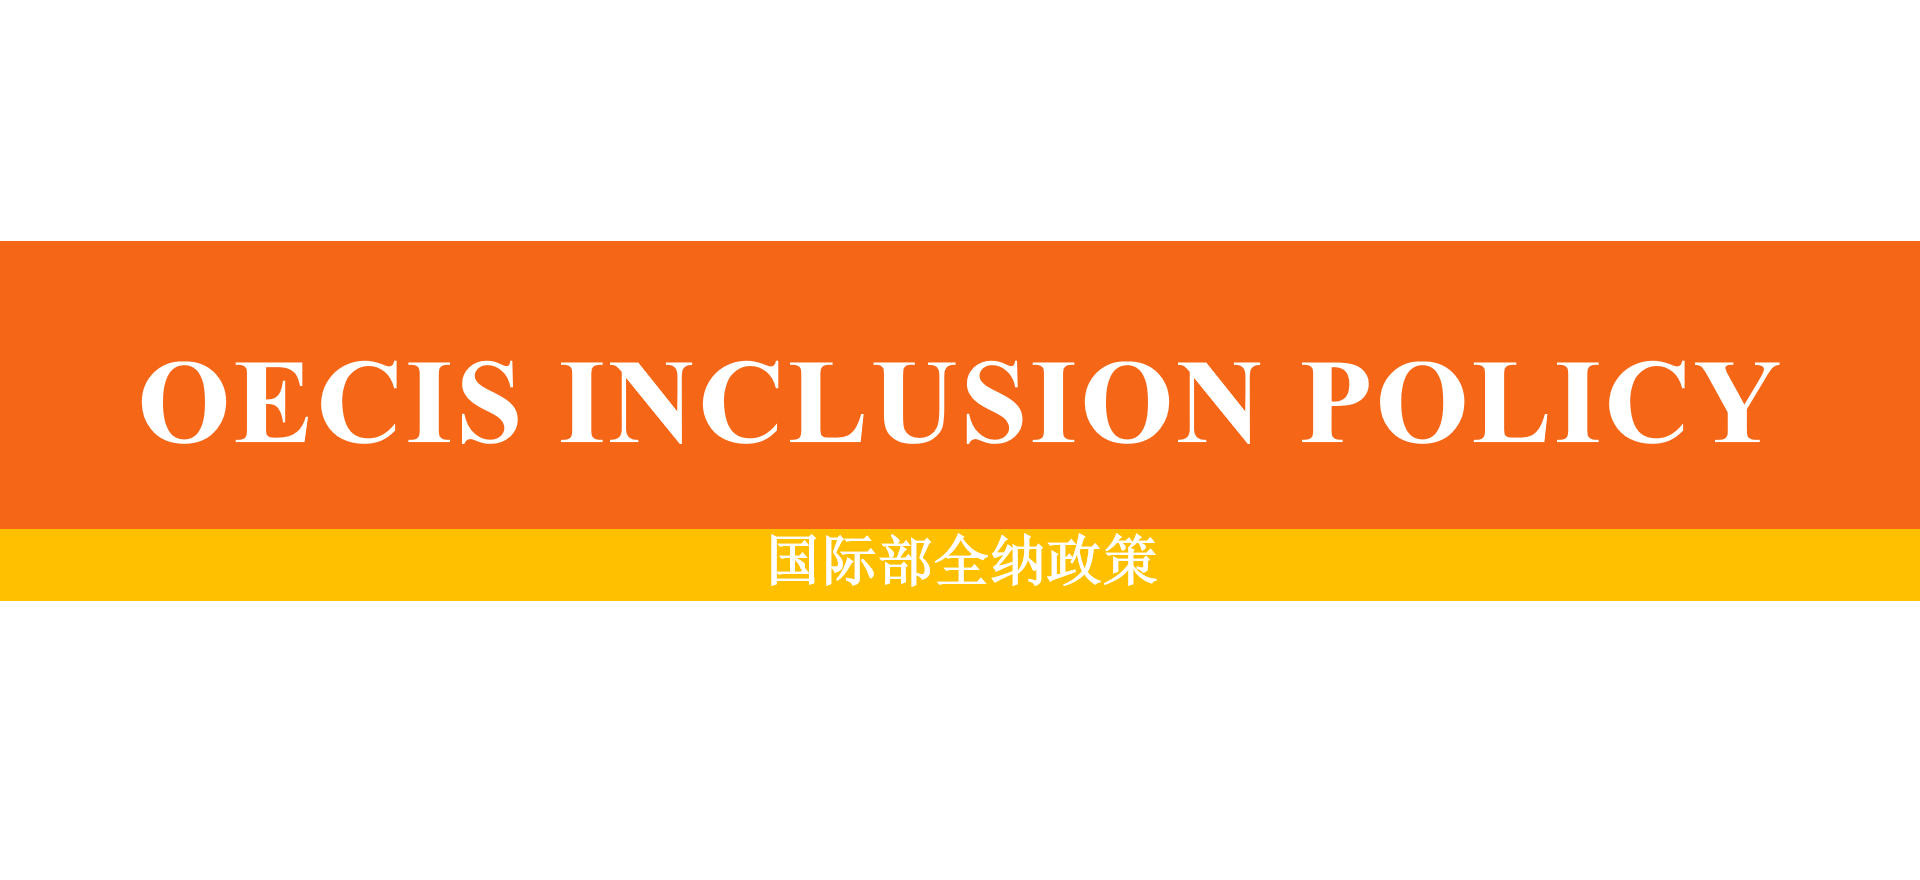 OECIS Inclusion Policy 国际部全纳政策